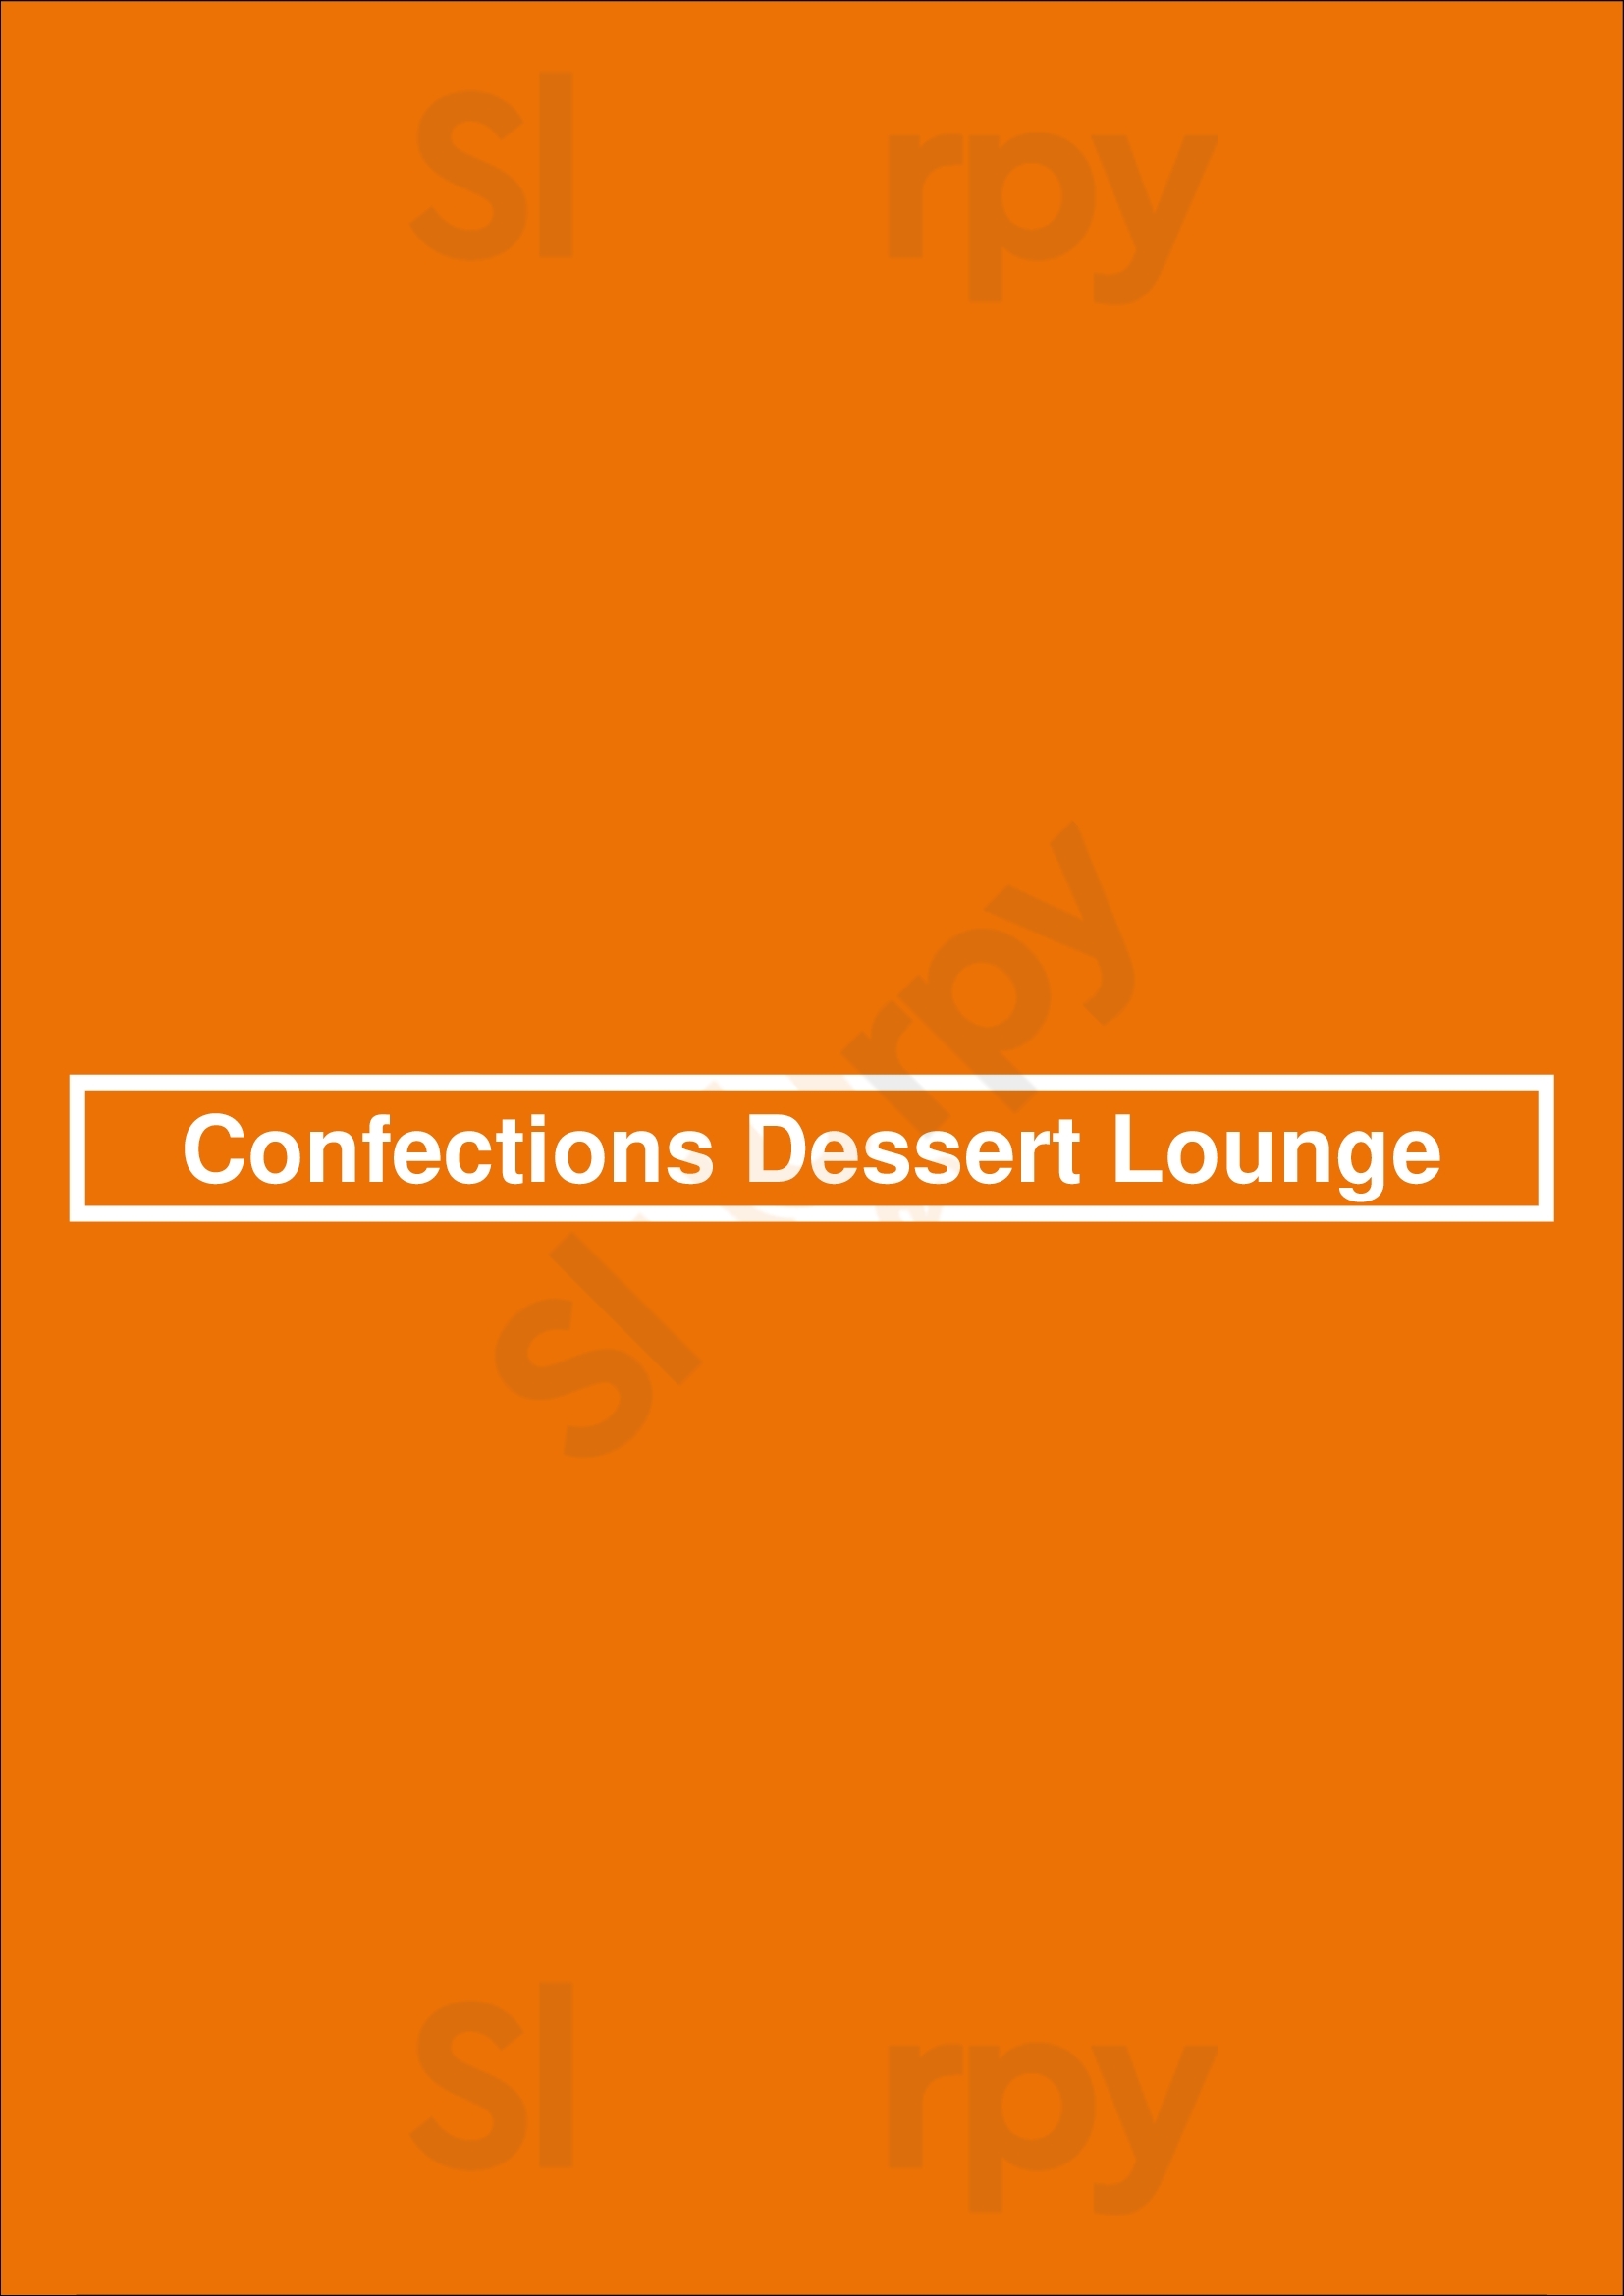 Confections Dessert Lounge Staten Island Menu - 1